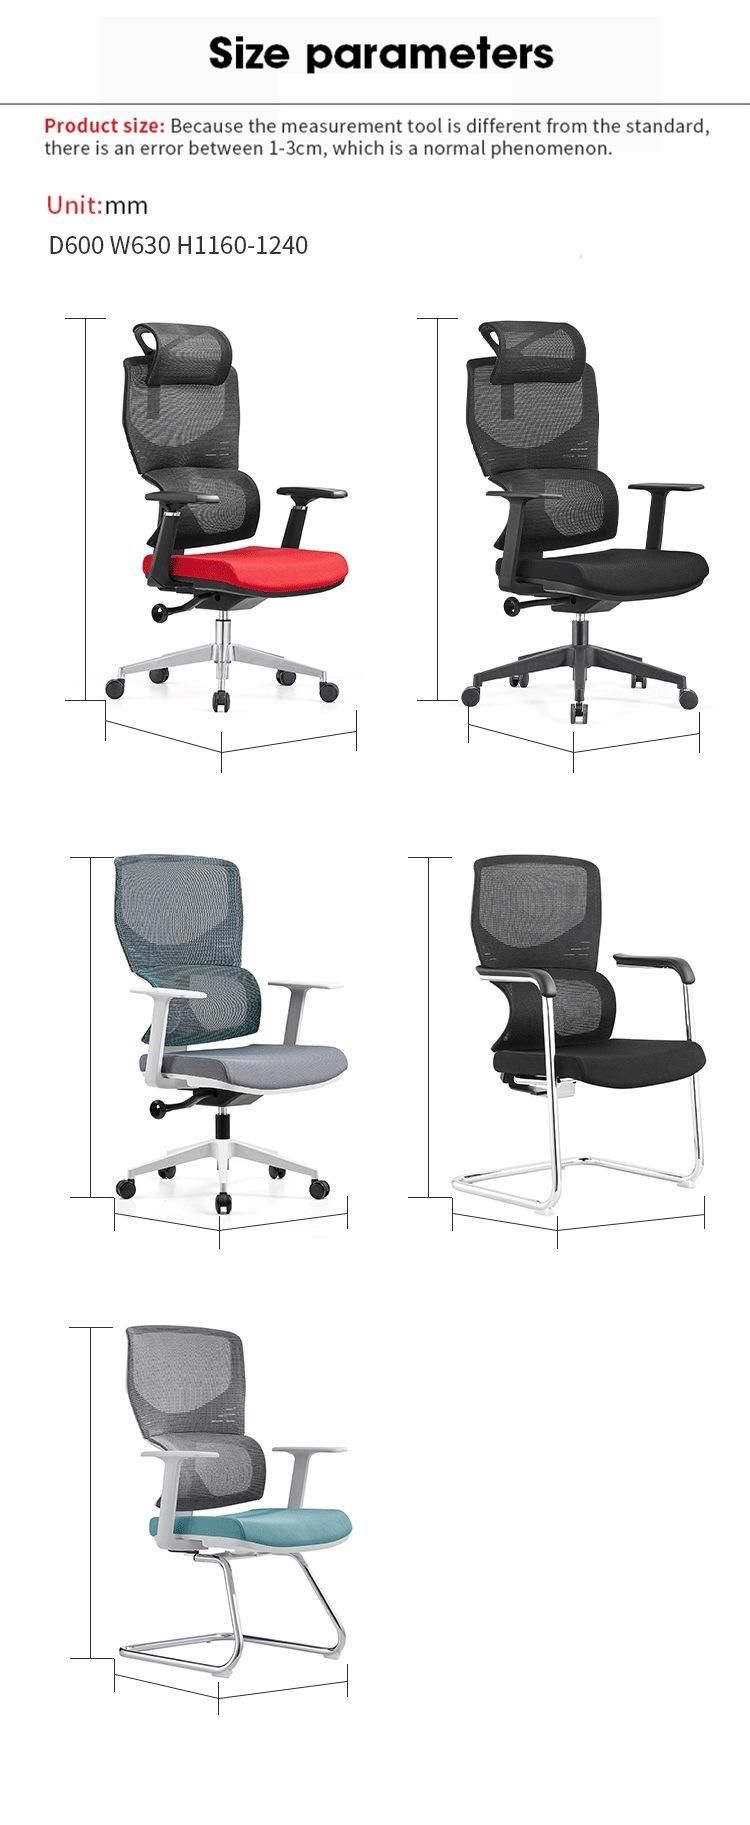 Modern High Back Mesh Swivel Tilt Adjustable Executive Office Chair